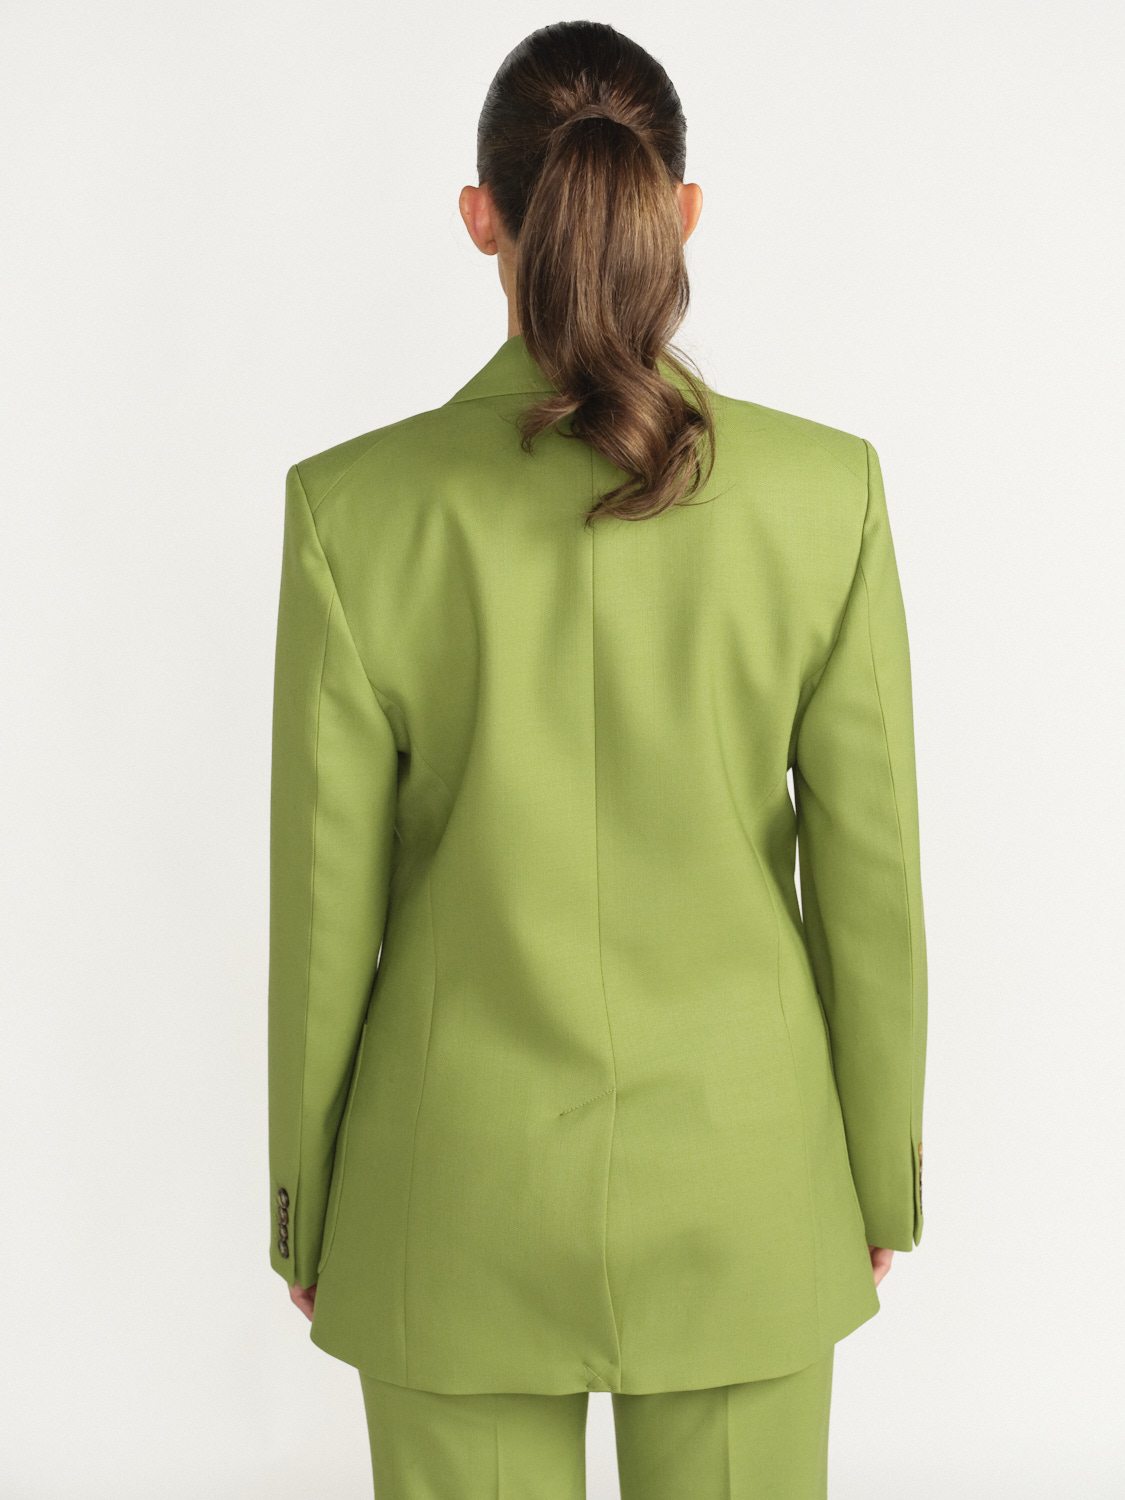 Victoria Beckham Patch Pocket - Classic blazer with patch pockets green 36